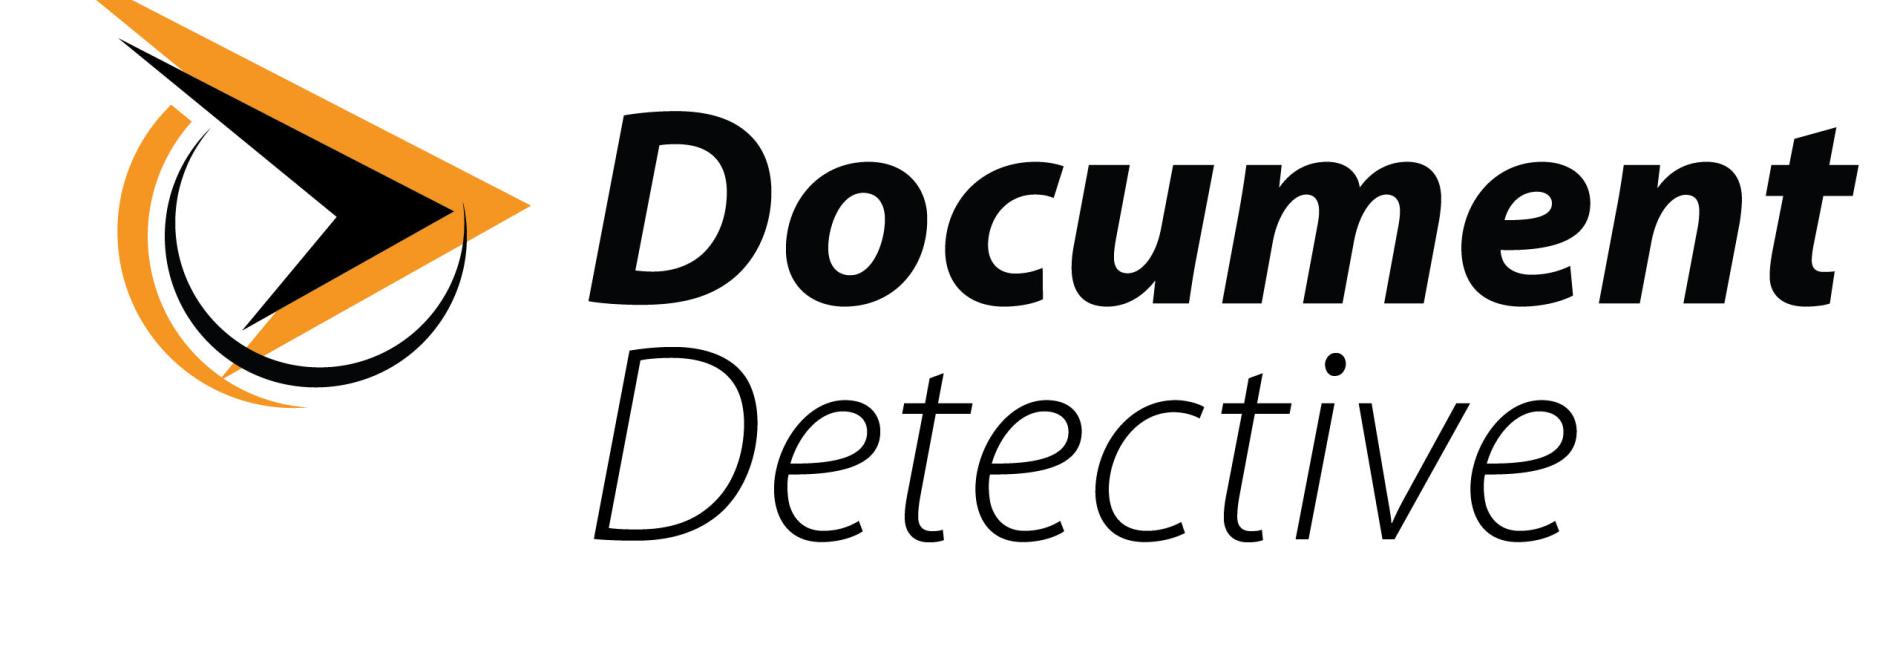 Document Detective logo - banner